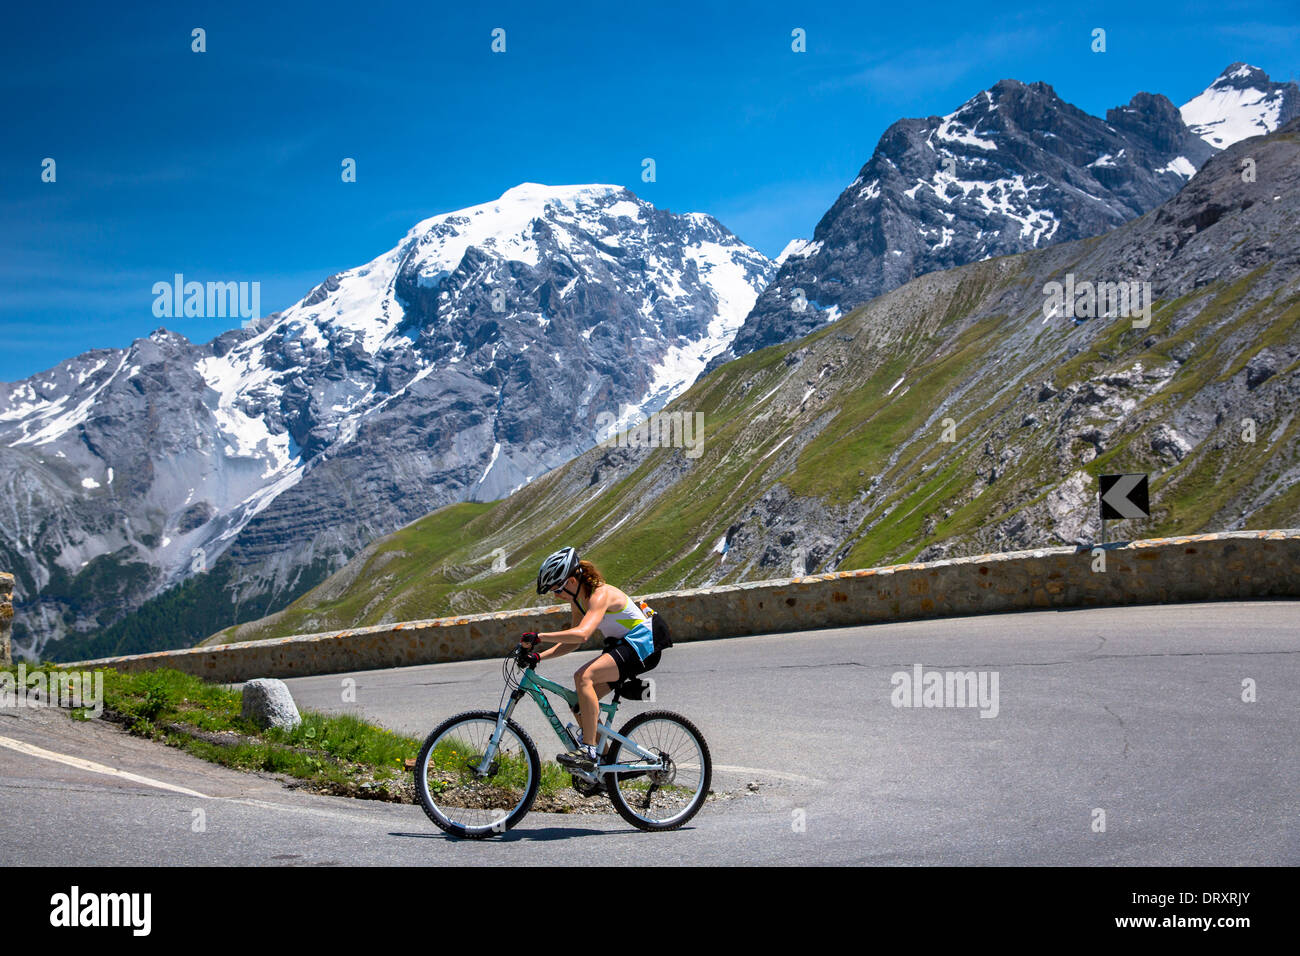 Female cyclist rides Scott British mountain bike uphill on The Stelvio Pass, Passo dello Stelvio, Stilfser Joch, the Alps, Italy Stock Photo